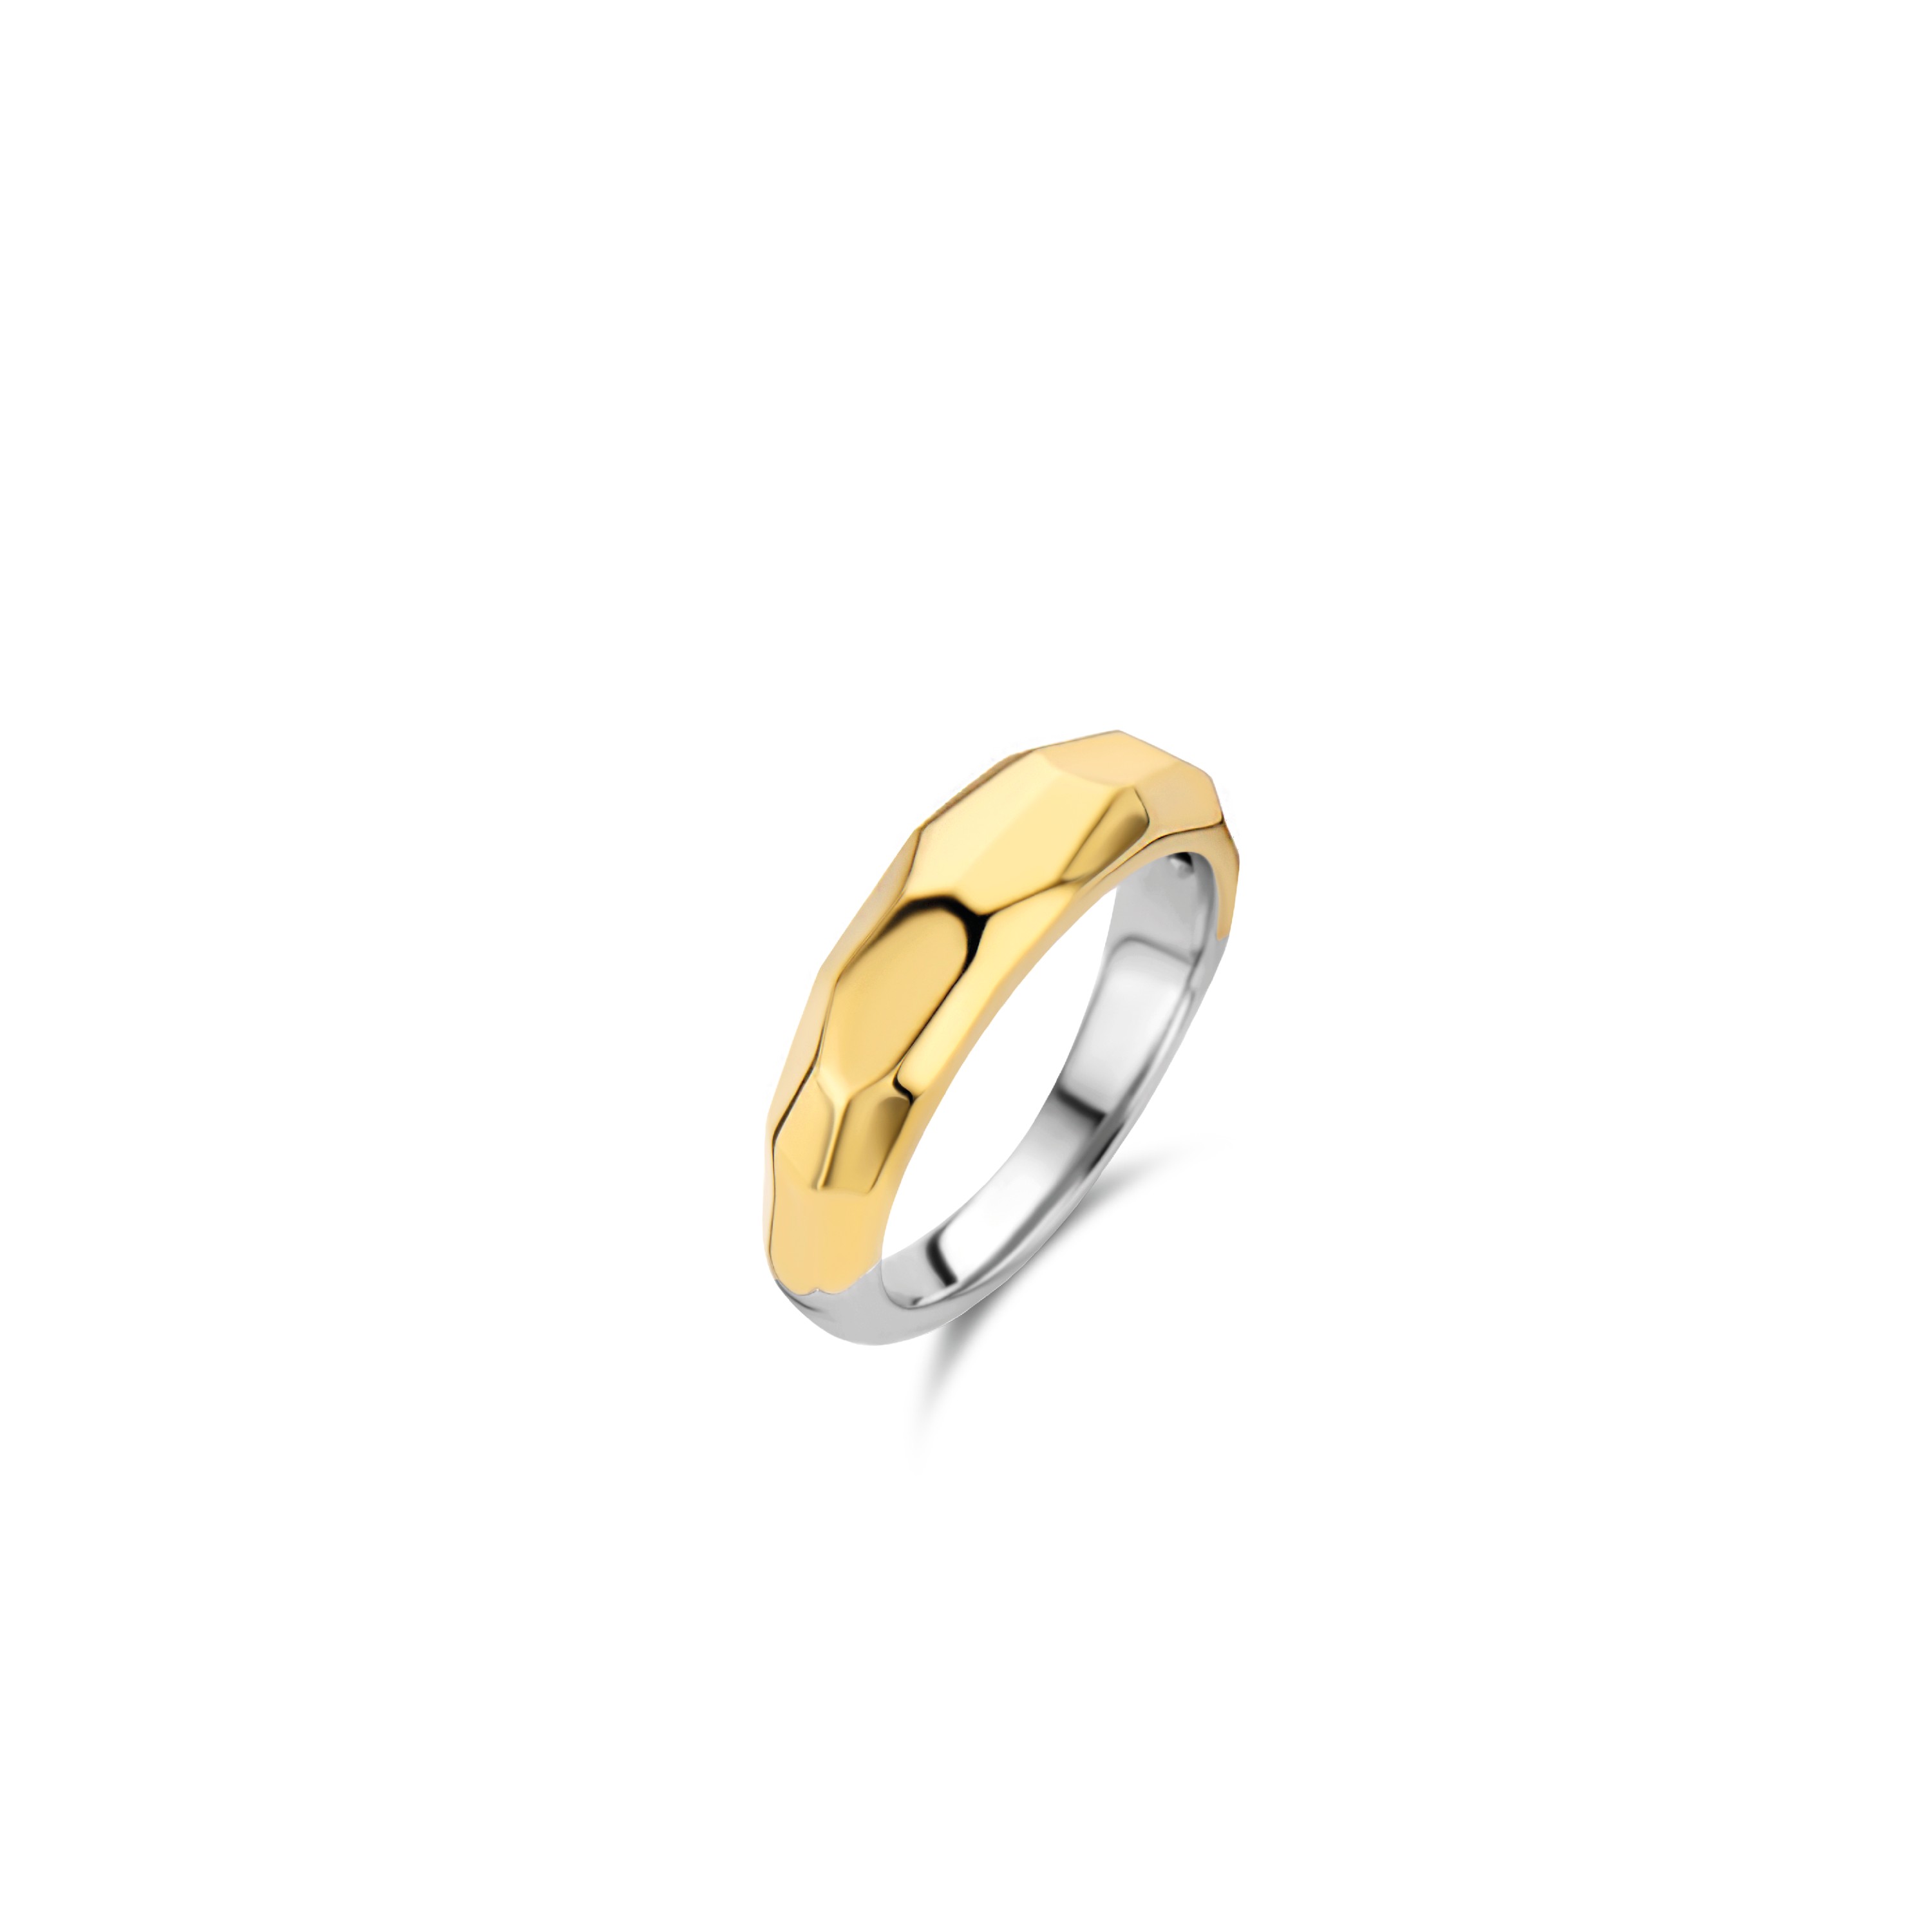 TI SENTO - Milano Ring 12201SY Gala Jewelers Inc. White Oak, PA